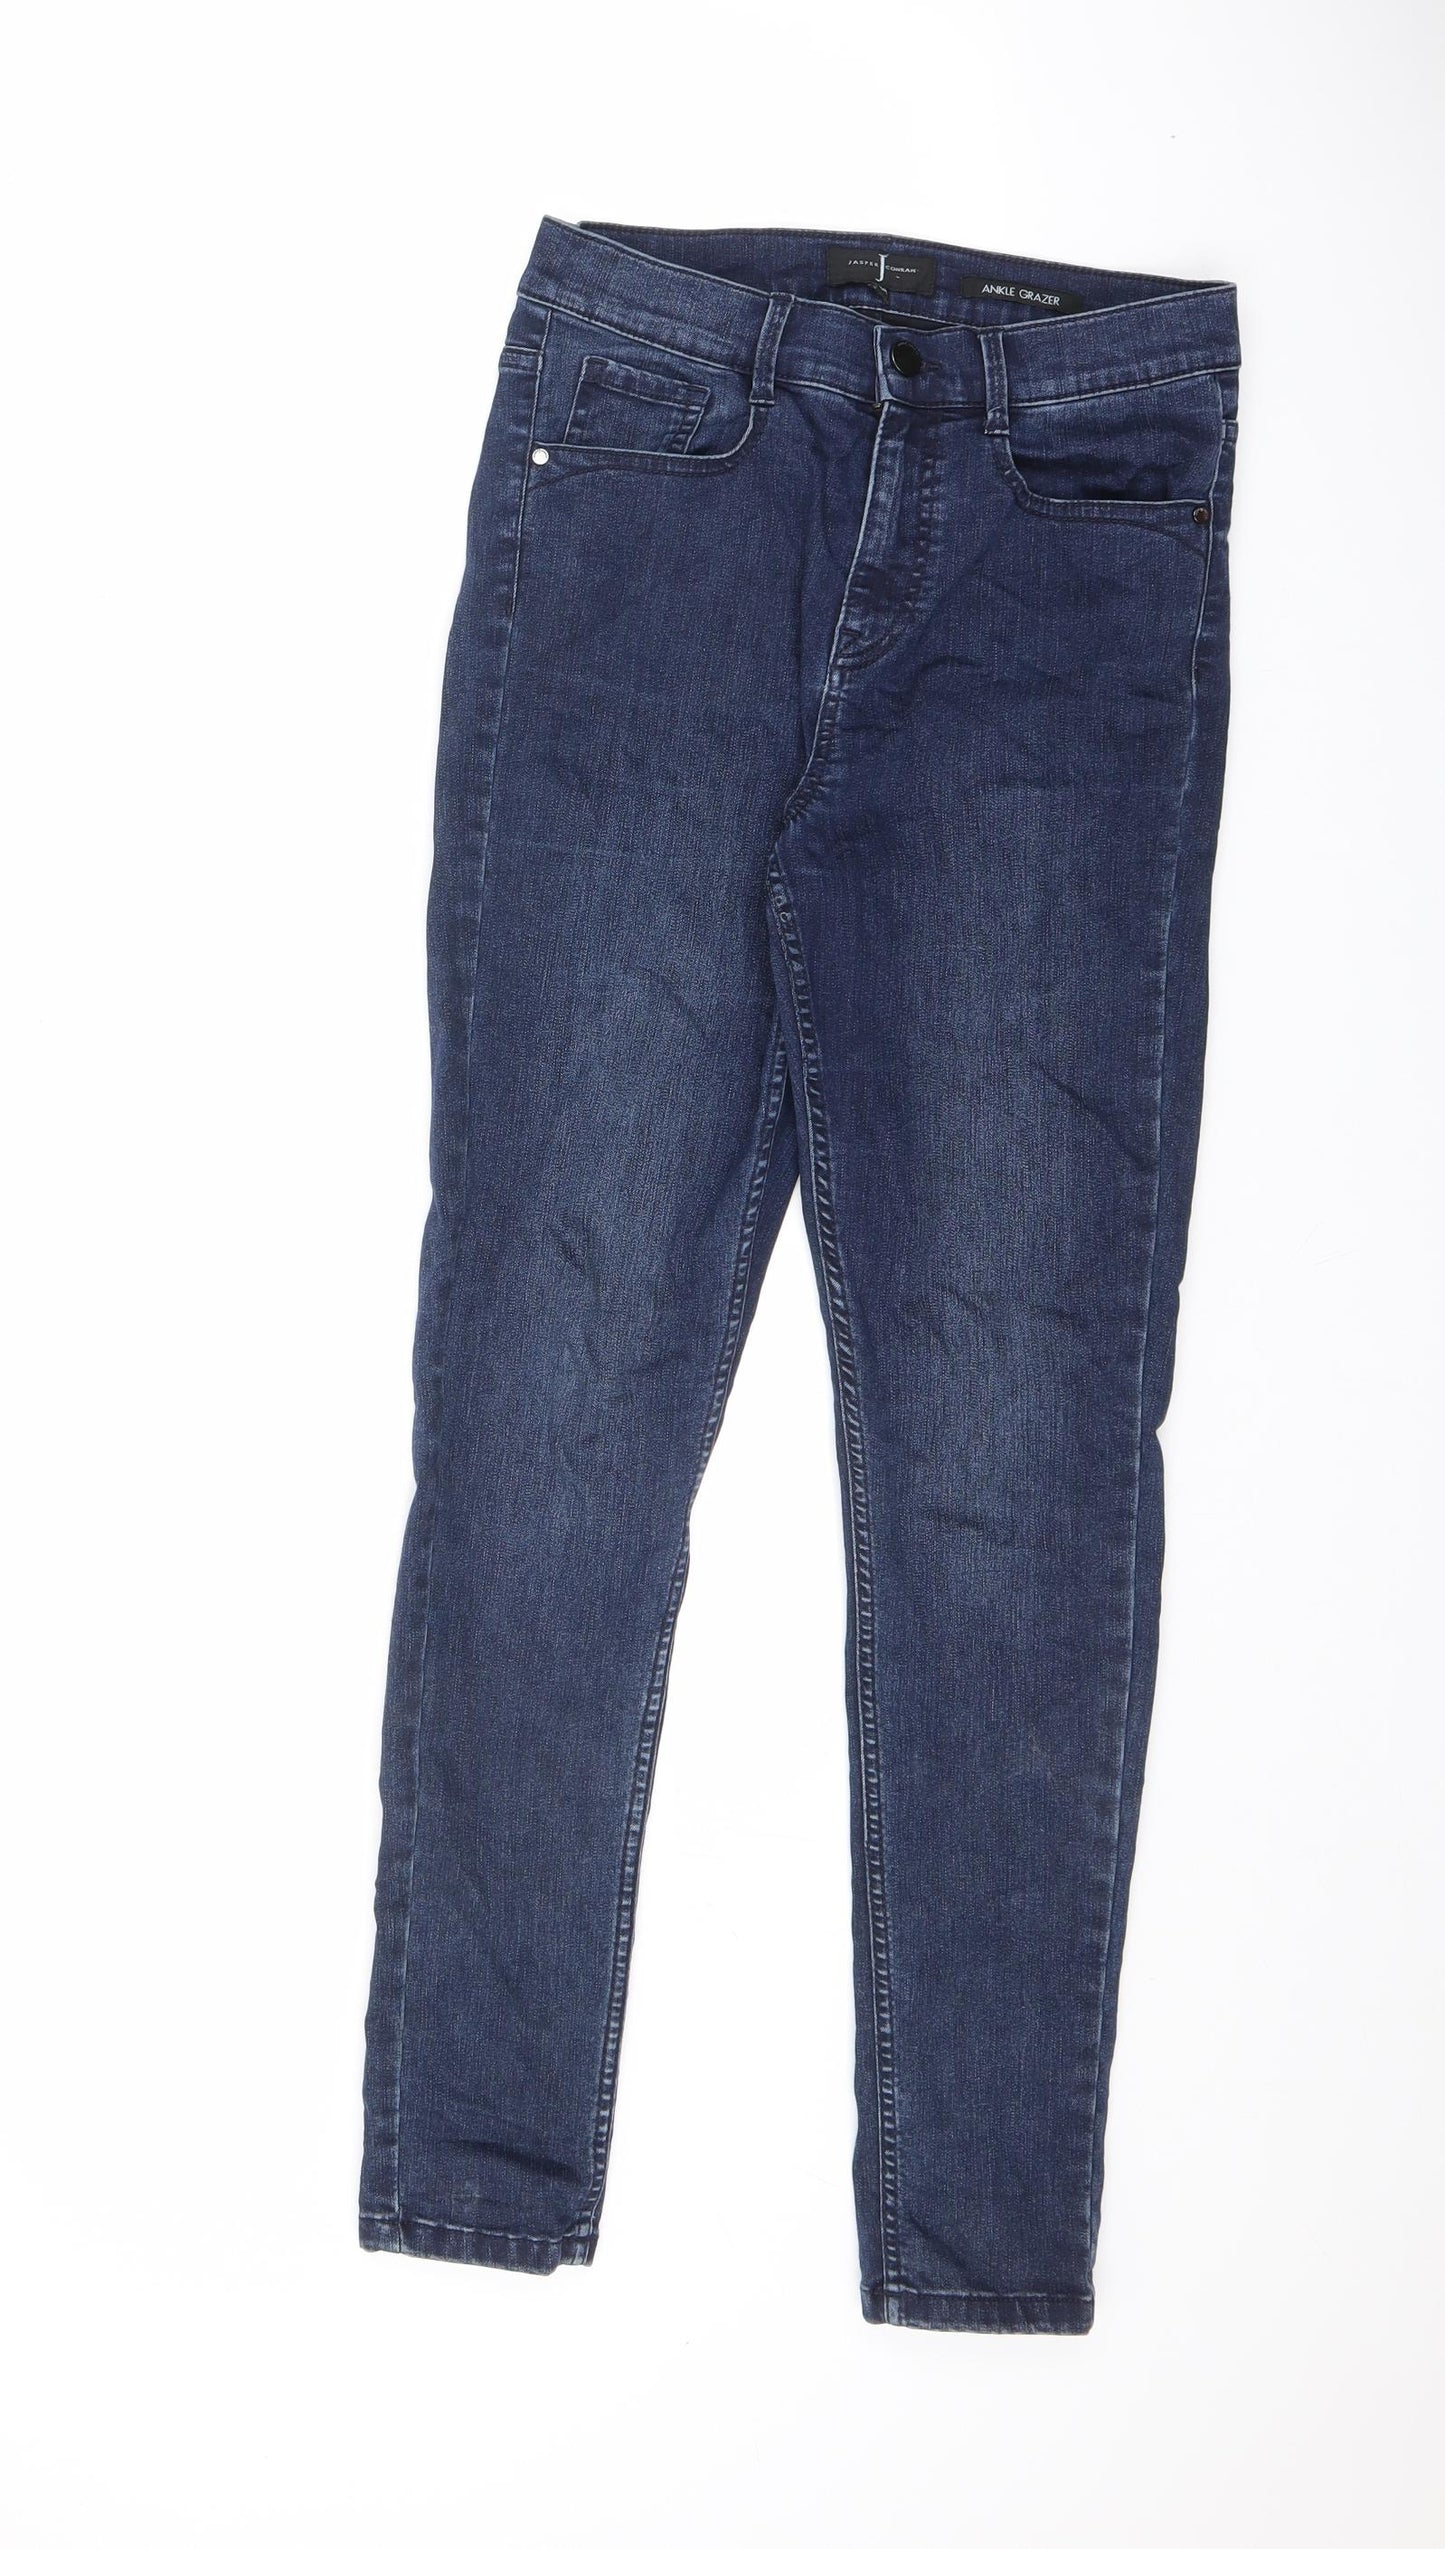 Jasper Conran Womens Blue Cotton Straight Jeans Size 10 L28.5 in Regular Zip